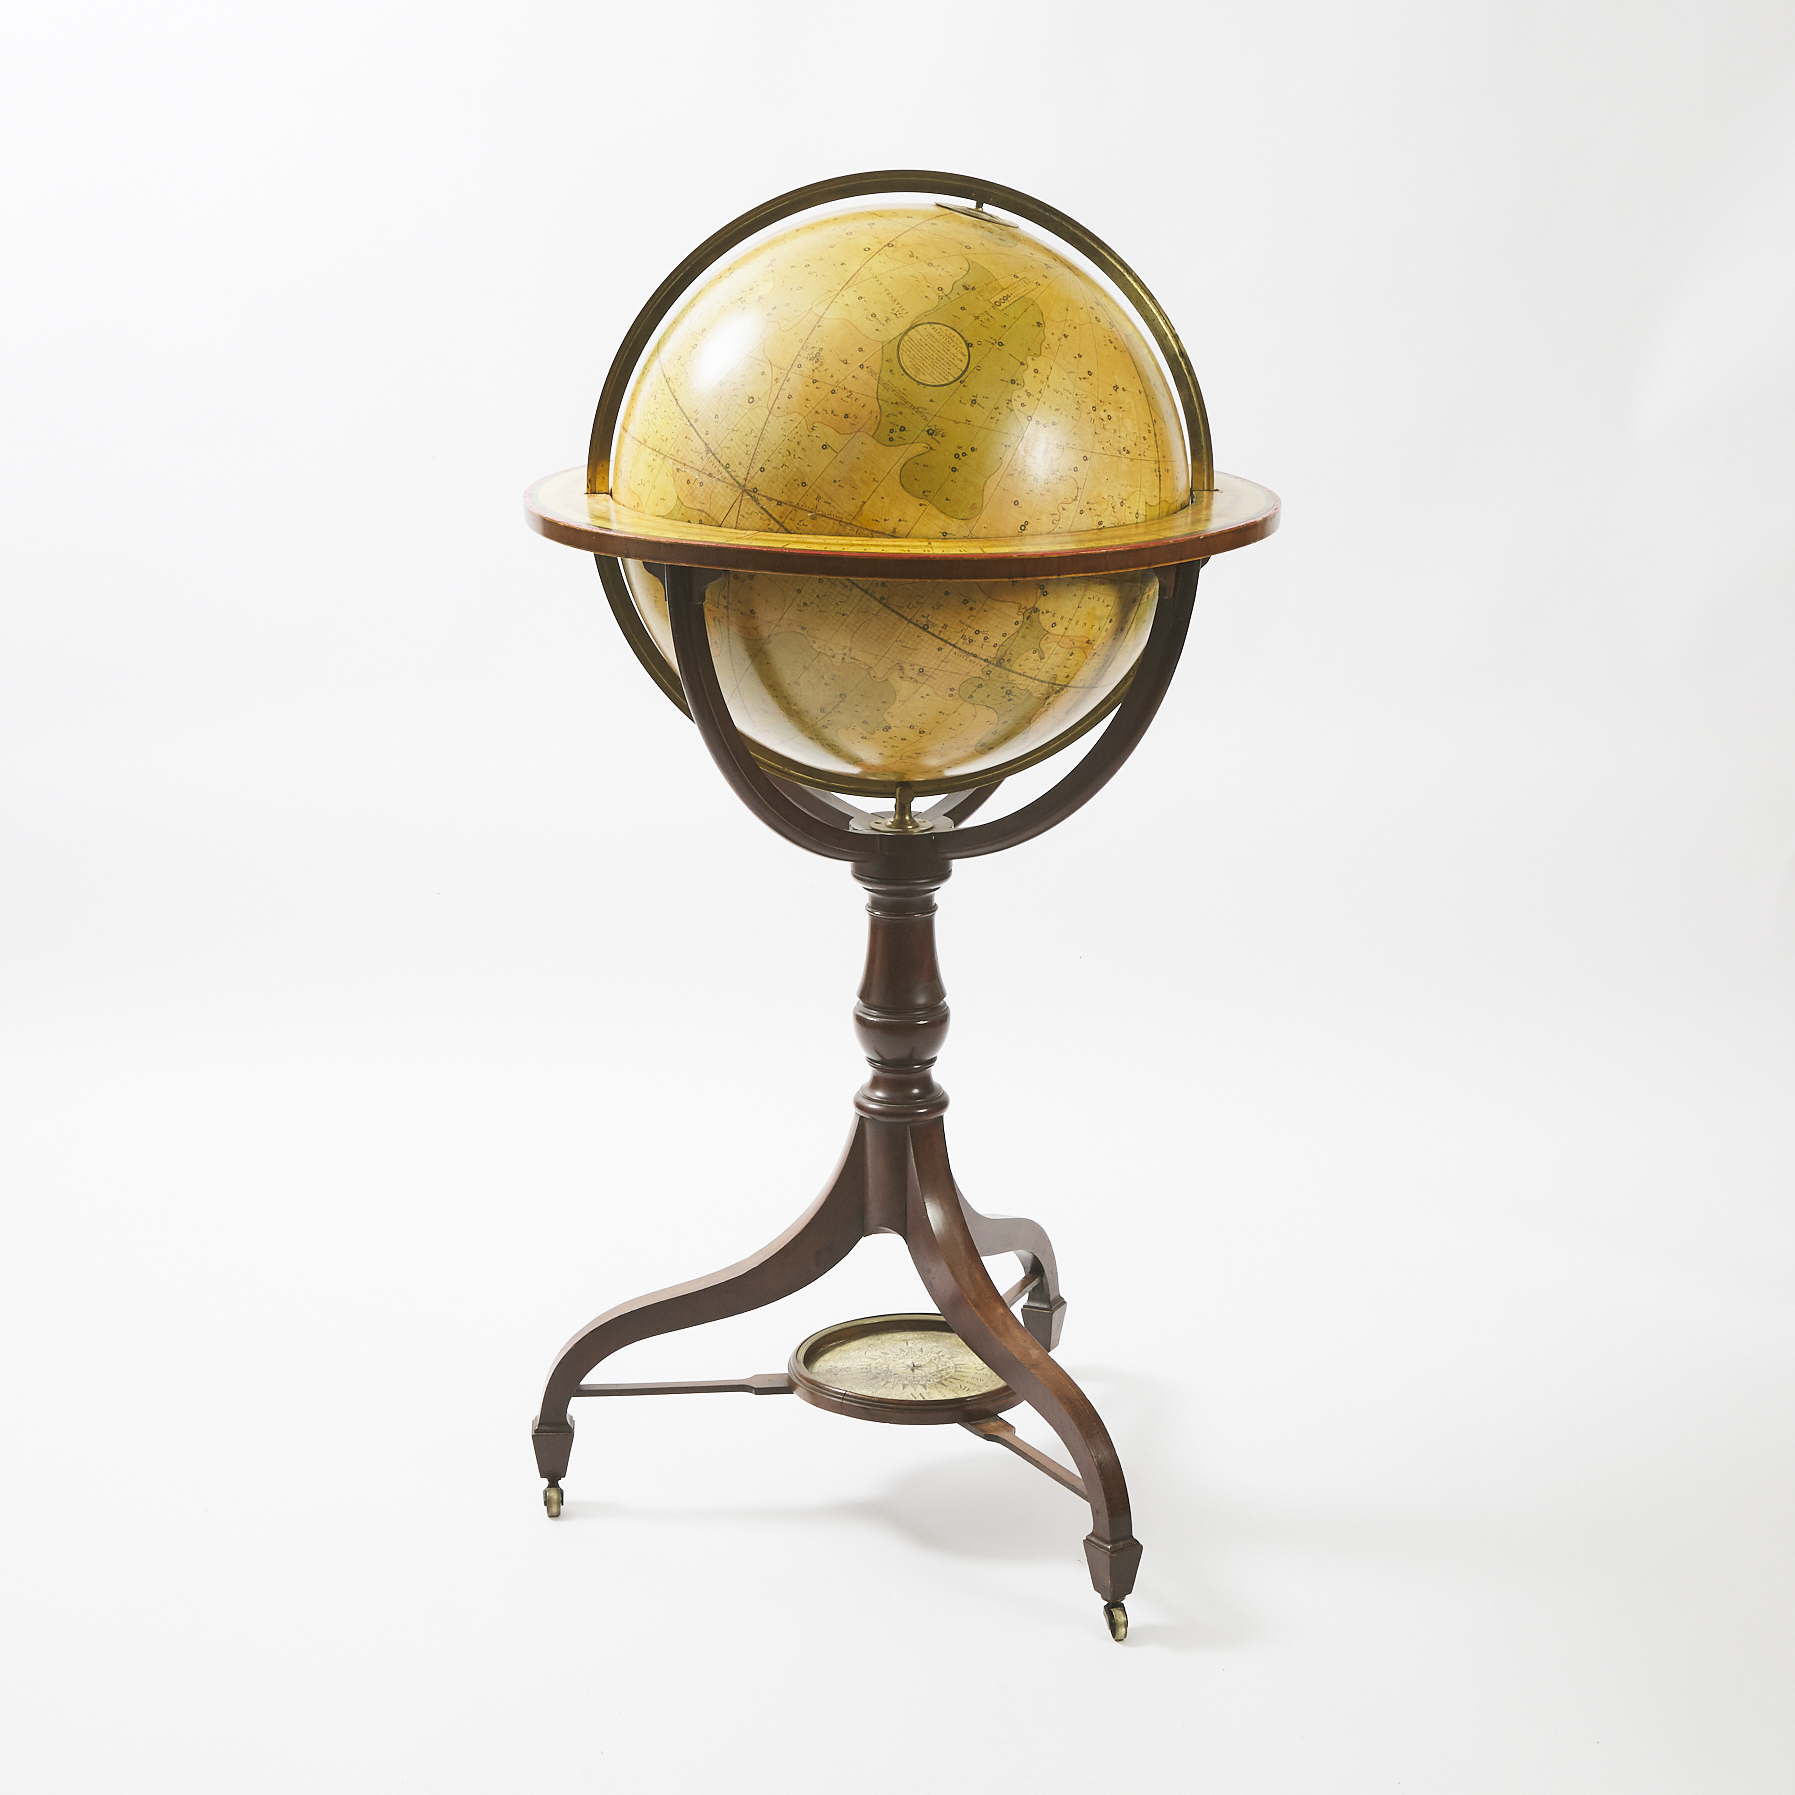 Large and Impressive George III Mahogany 21 Inch Celestial Library Globe, J. & W. Cary, London, 1799